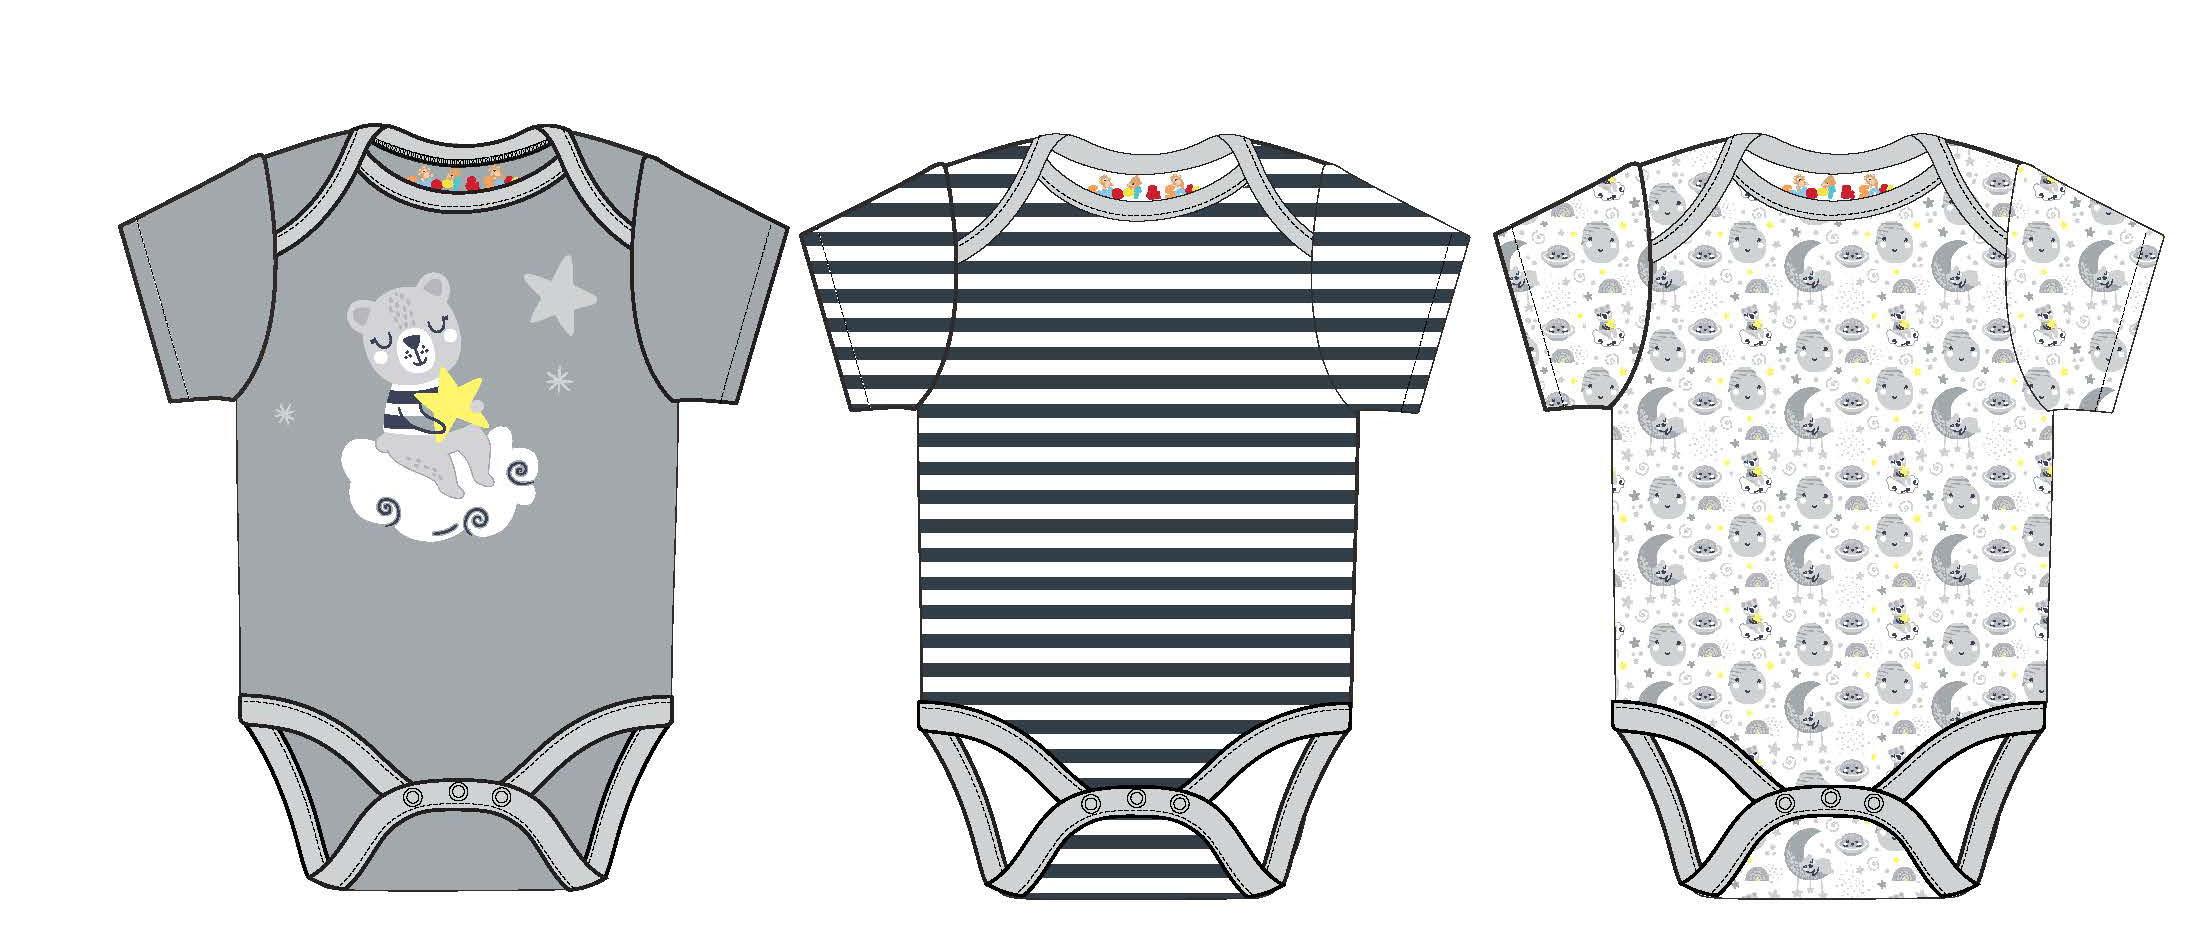 ''Baby Boy's Printed Short-Sleeve Onesie w/ Stripes, Night Sky, Embroidered Bear Star Print - Sizes 1